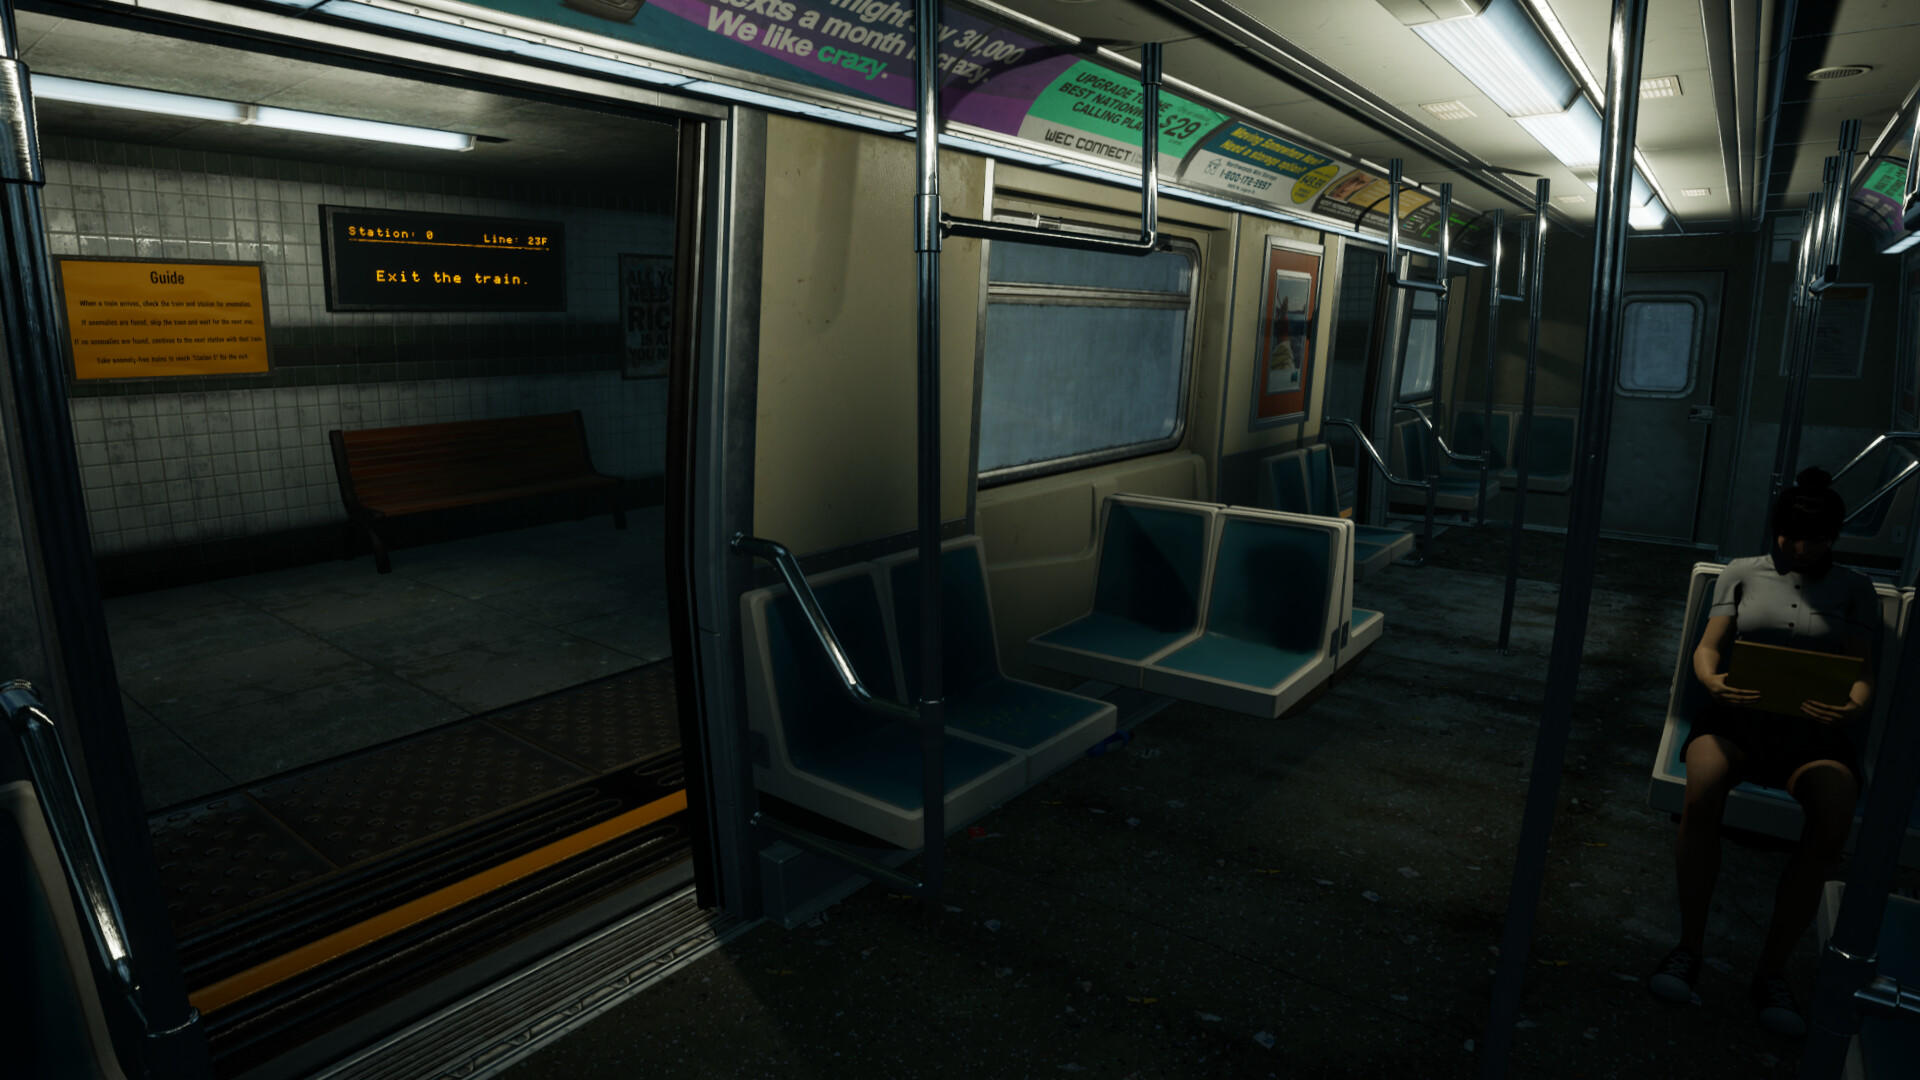 Screenshot of Station 5